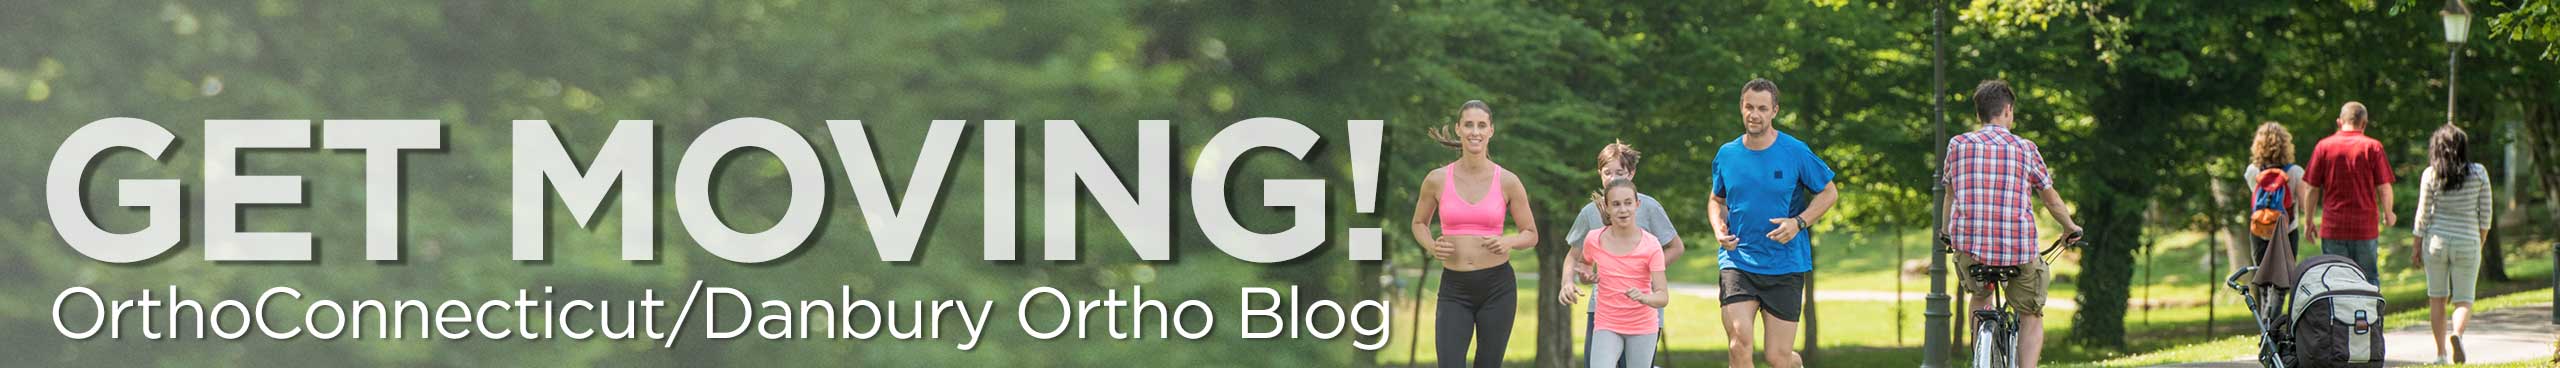 Get Moving! OrthoConnecticut orthopedic blog banner